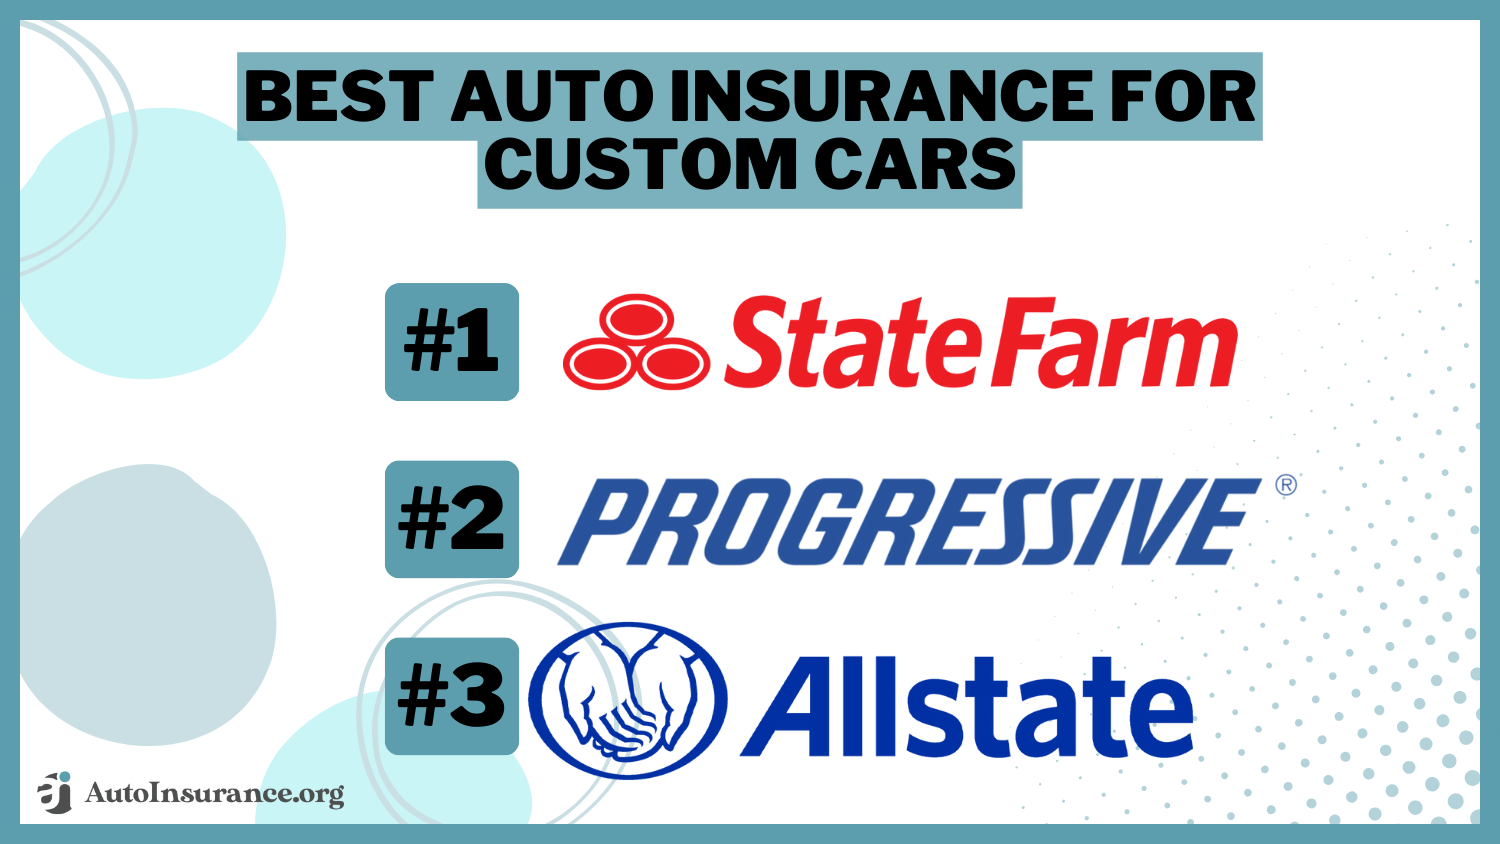 State Farm Progressive and Allstate: Best Auto Insurance for Custom Cars